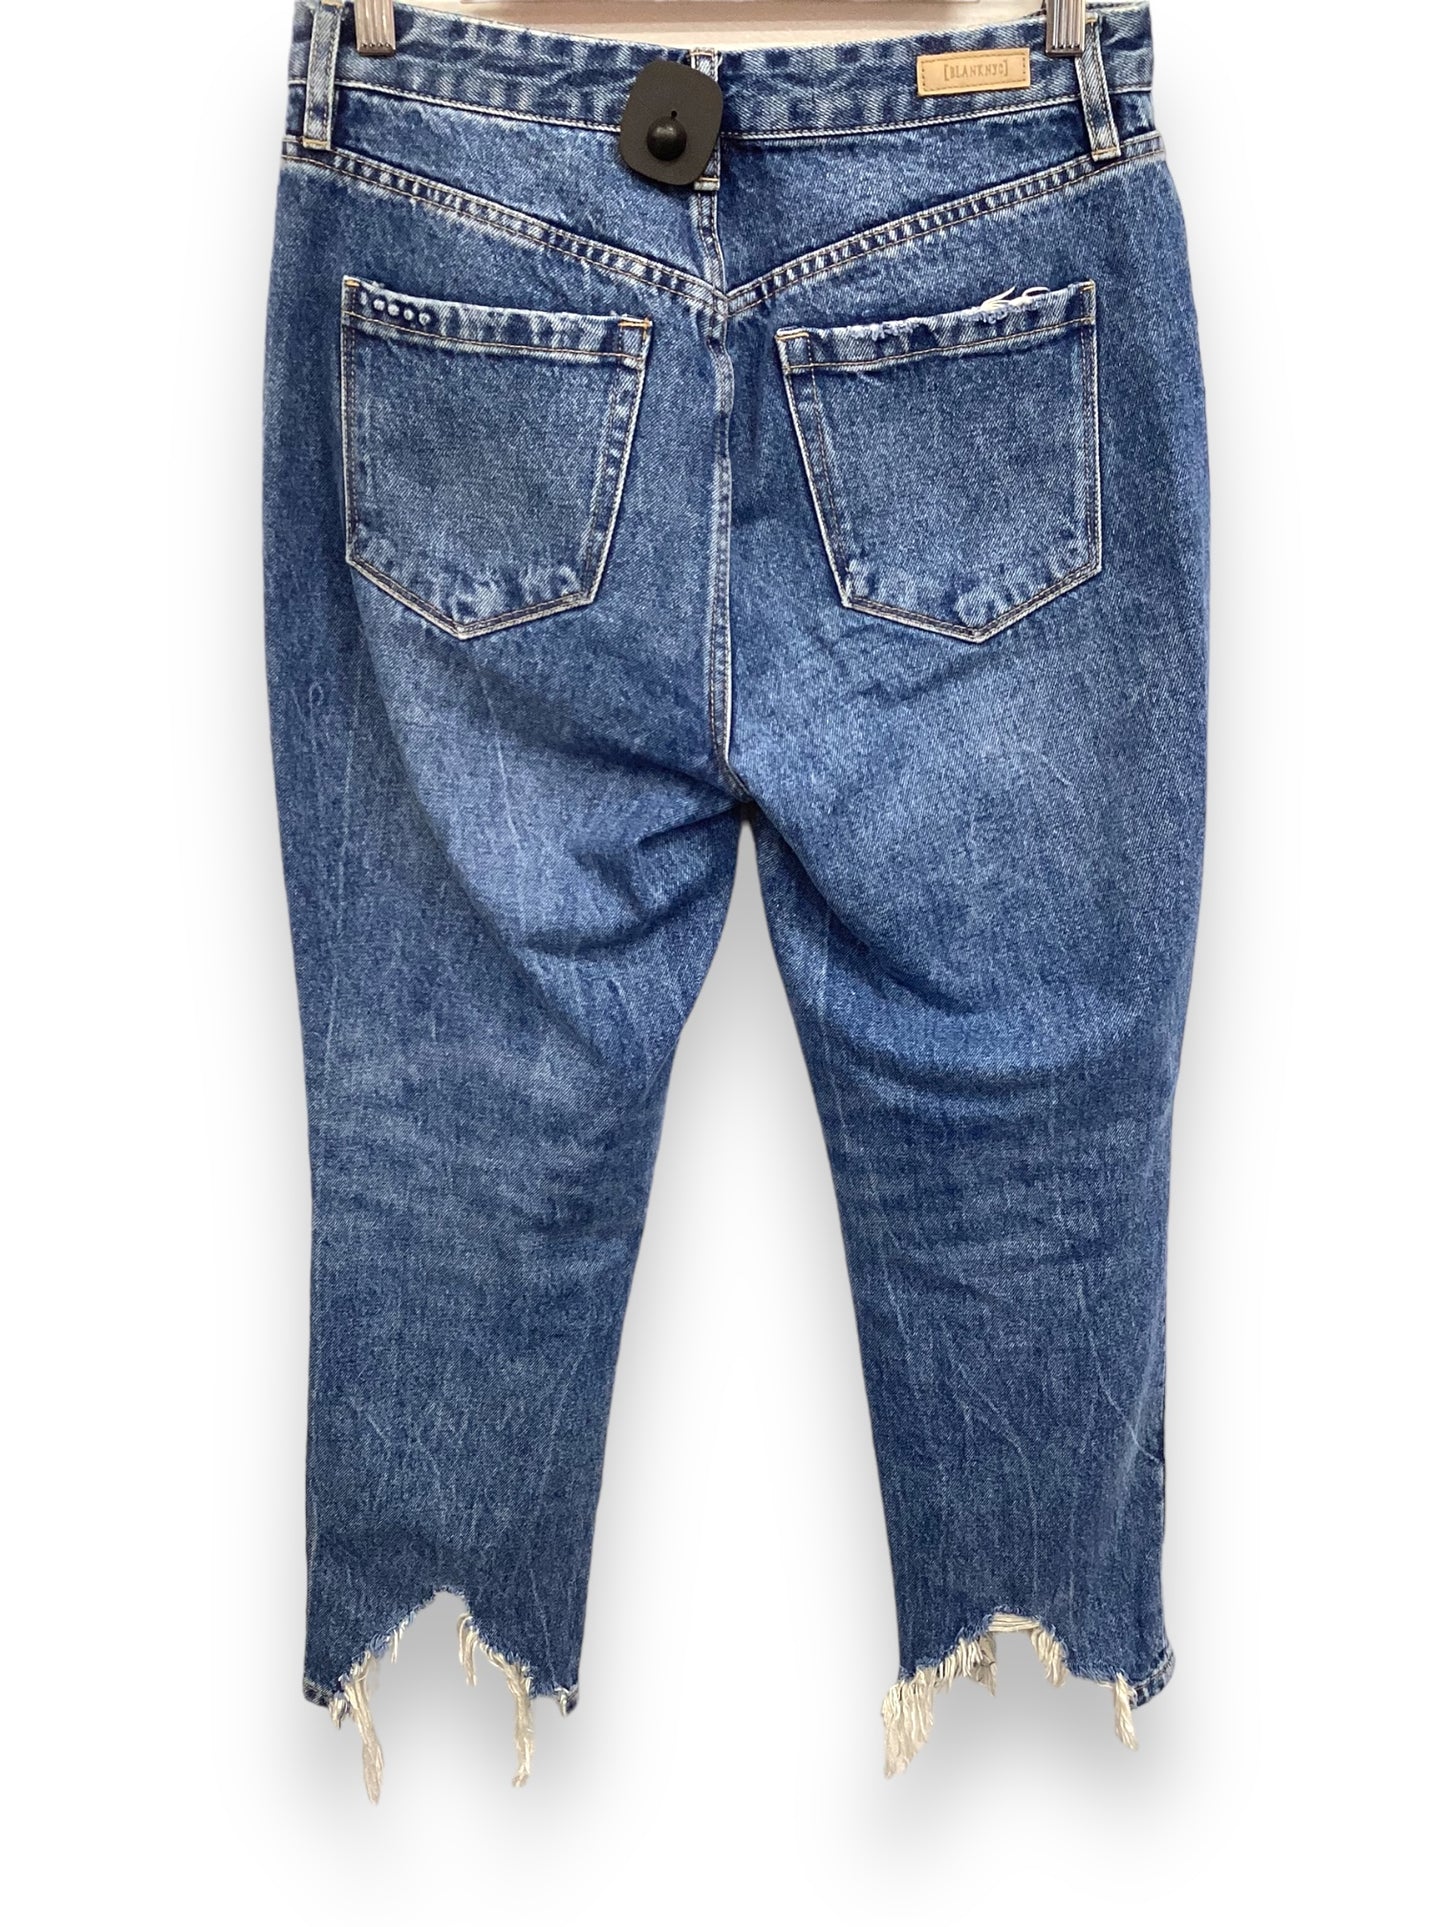 Jeans Cropped By Blanknyc  Size: 4